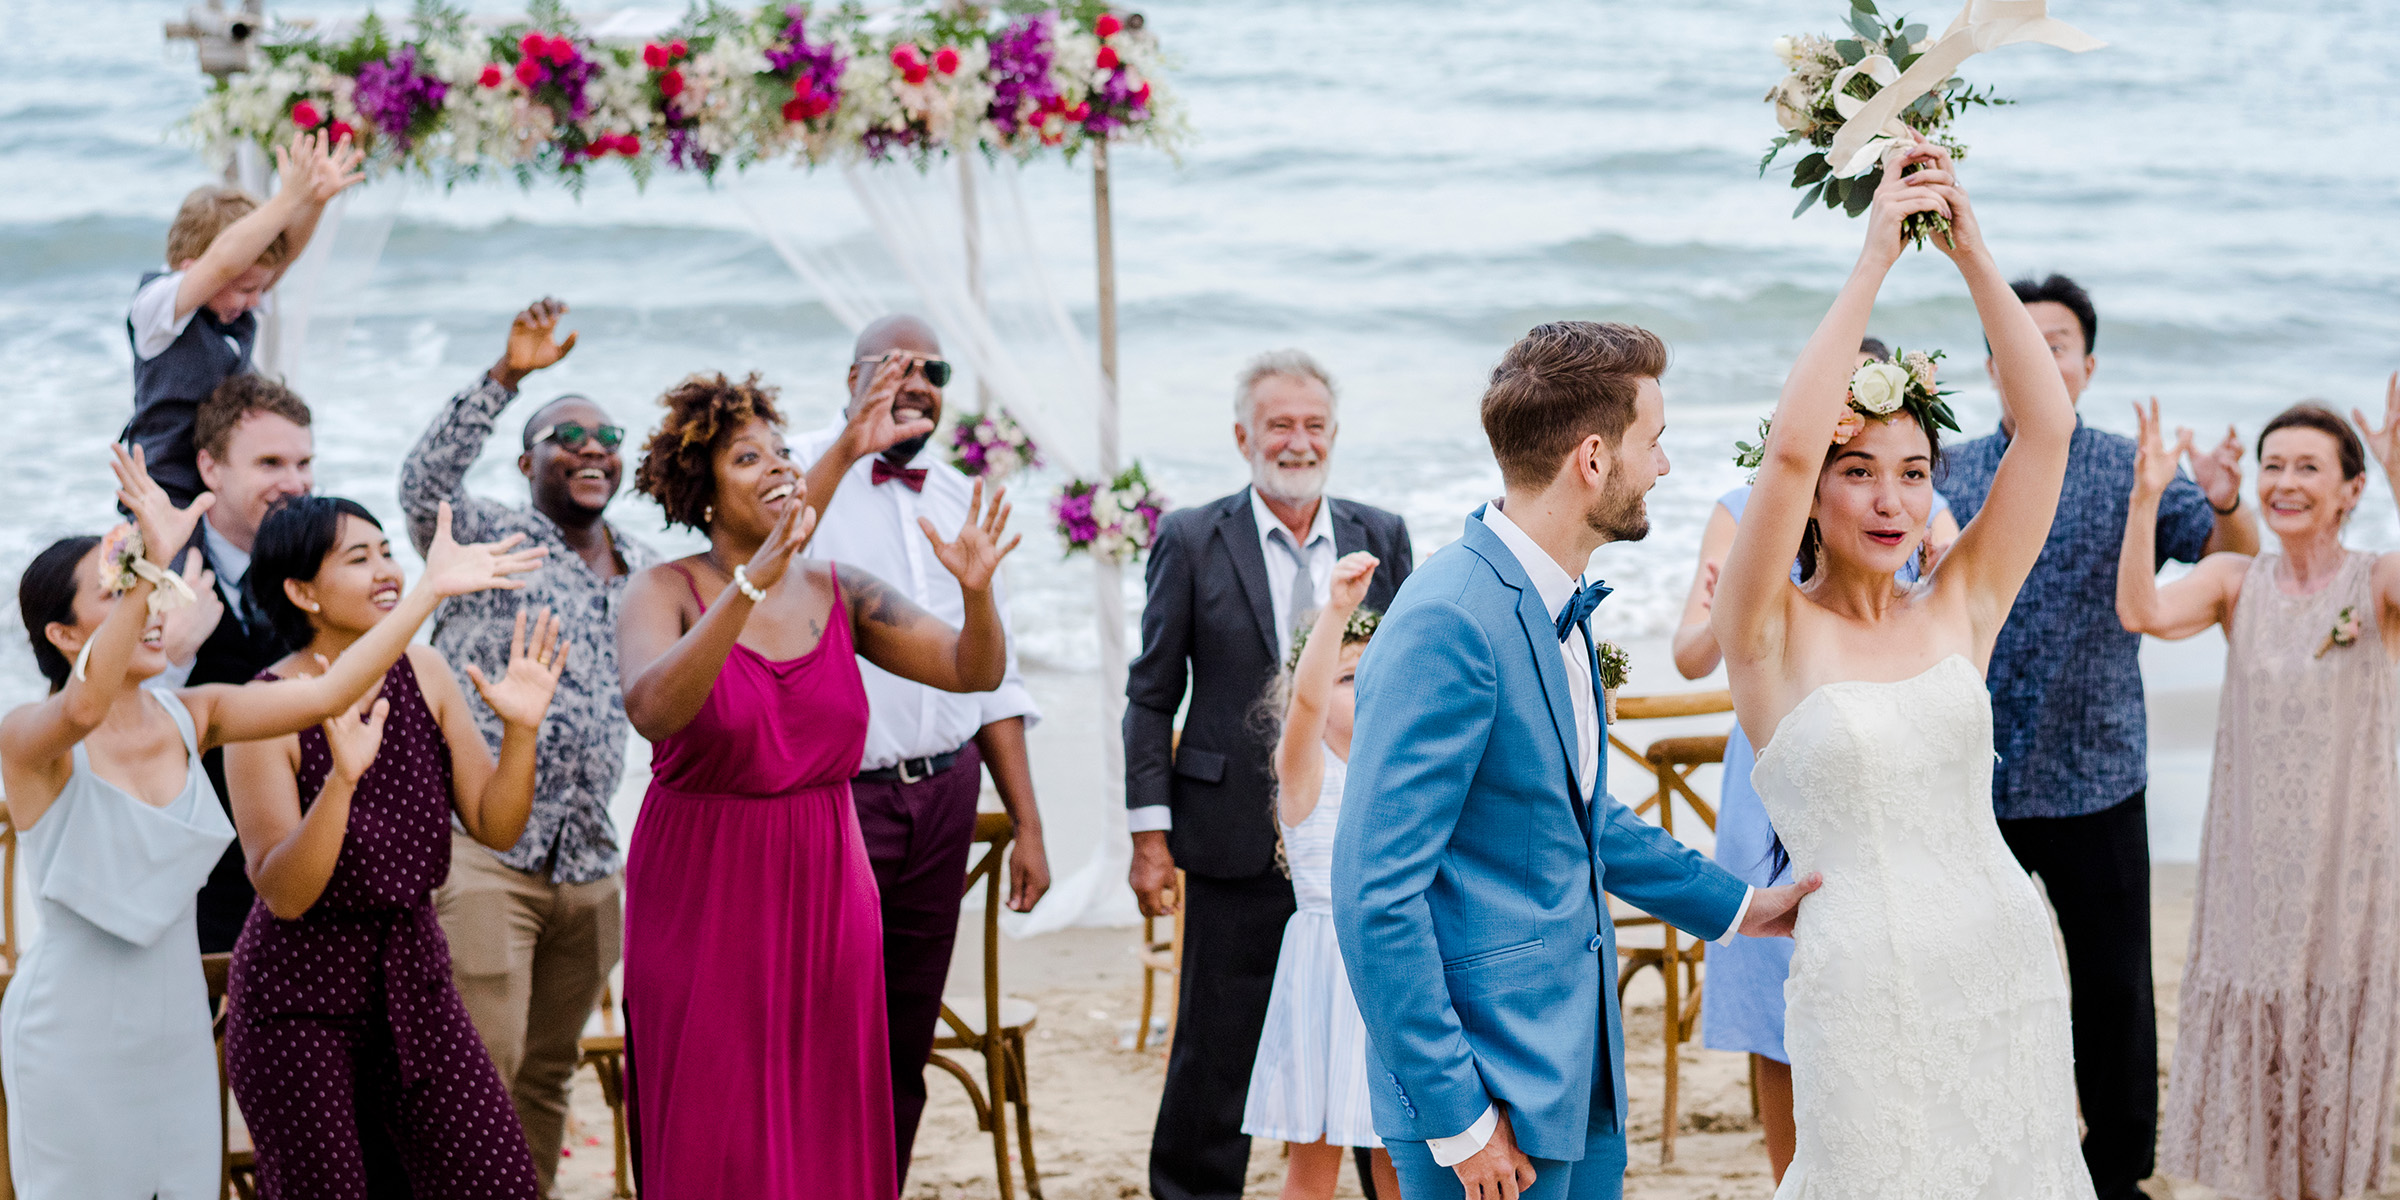 A wedding ceremony | Source: Shutterstock